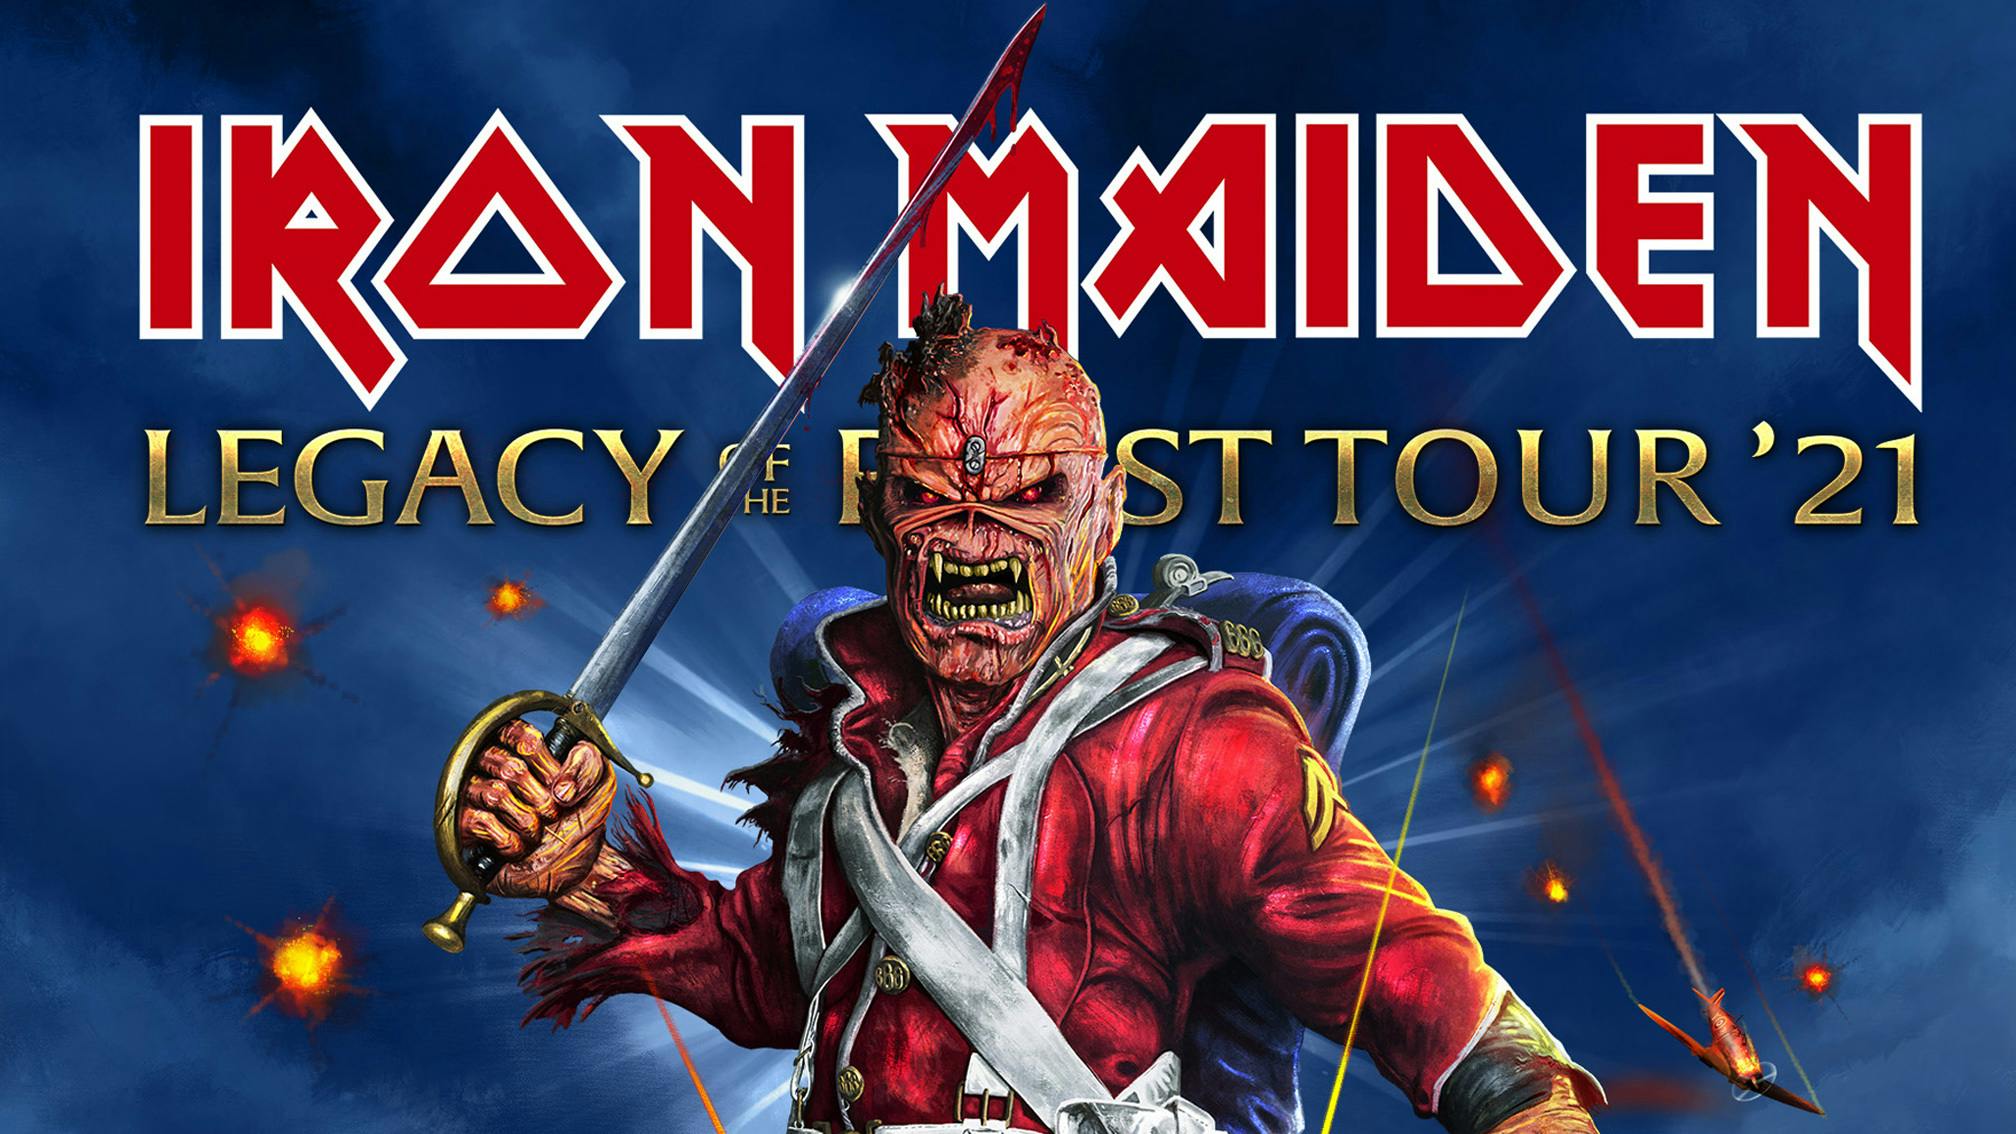 will iron maiden tour again